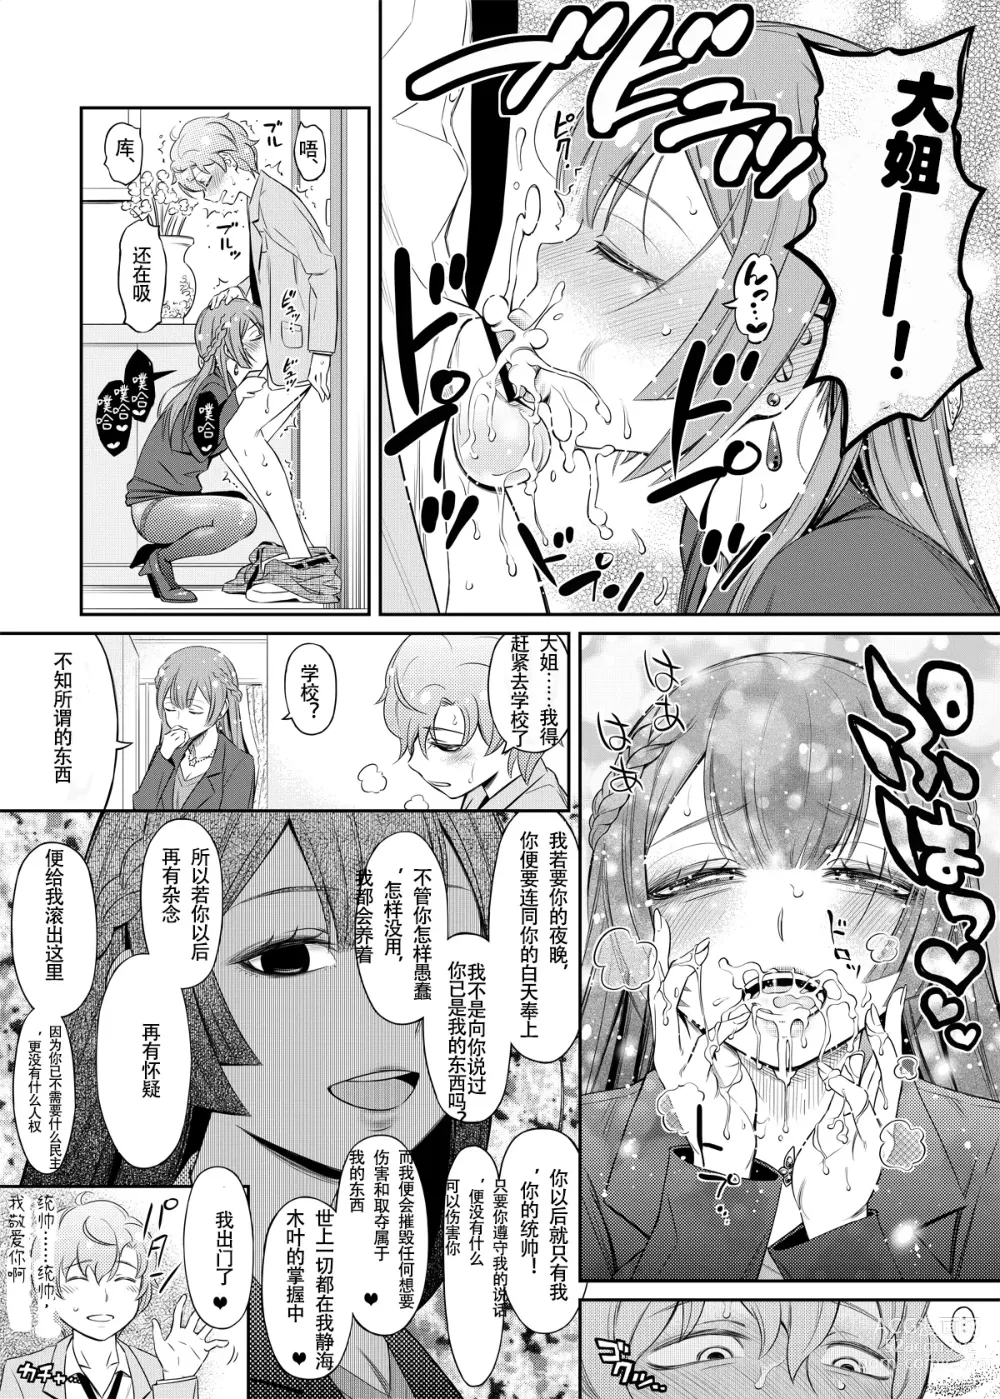 Page 7 of doujinshi Konoha-san 27-sai Pet o Kau